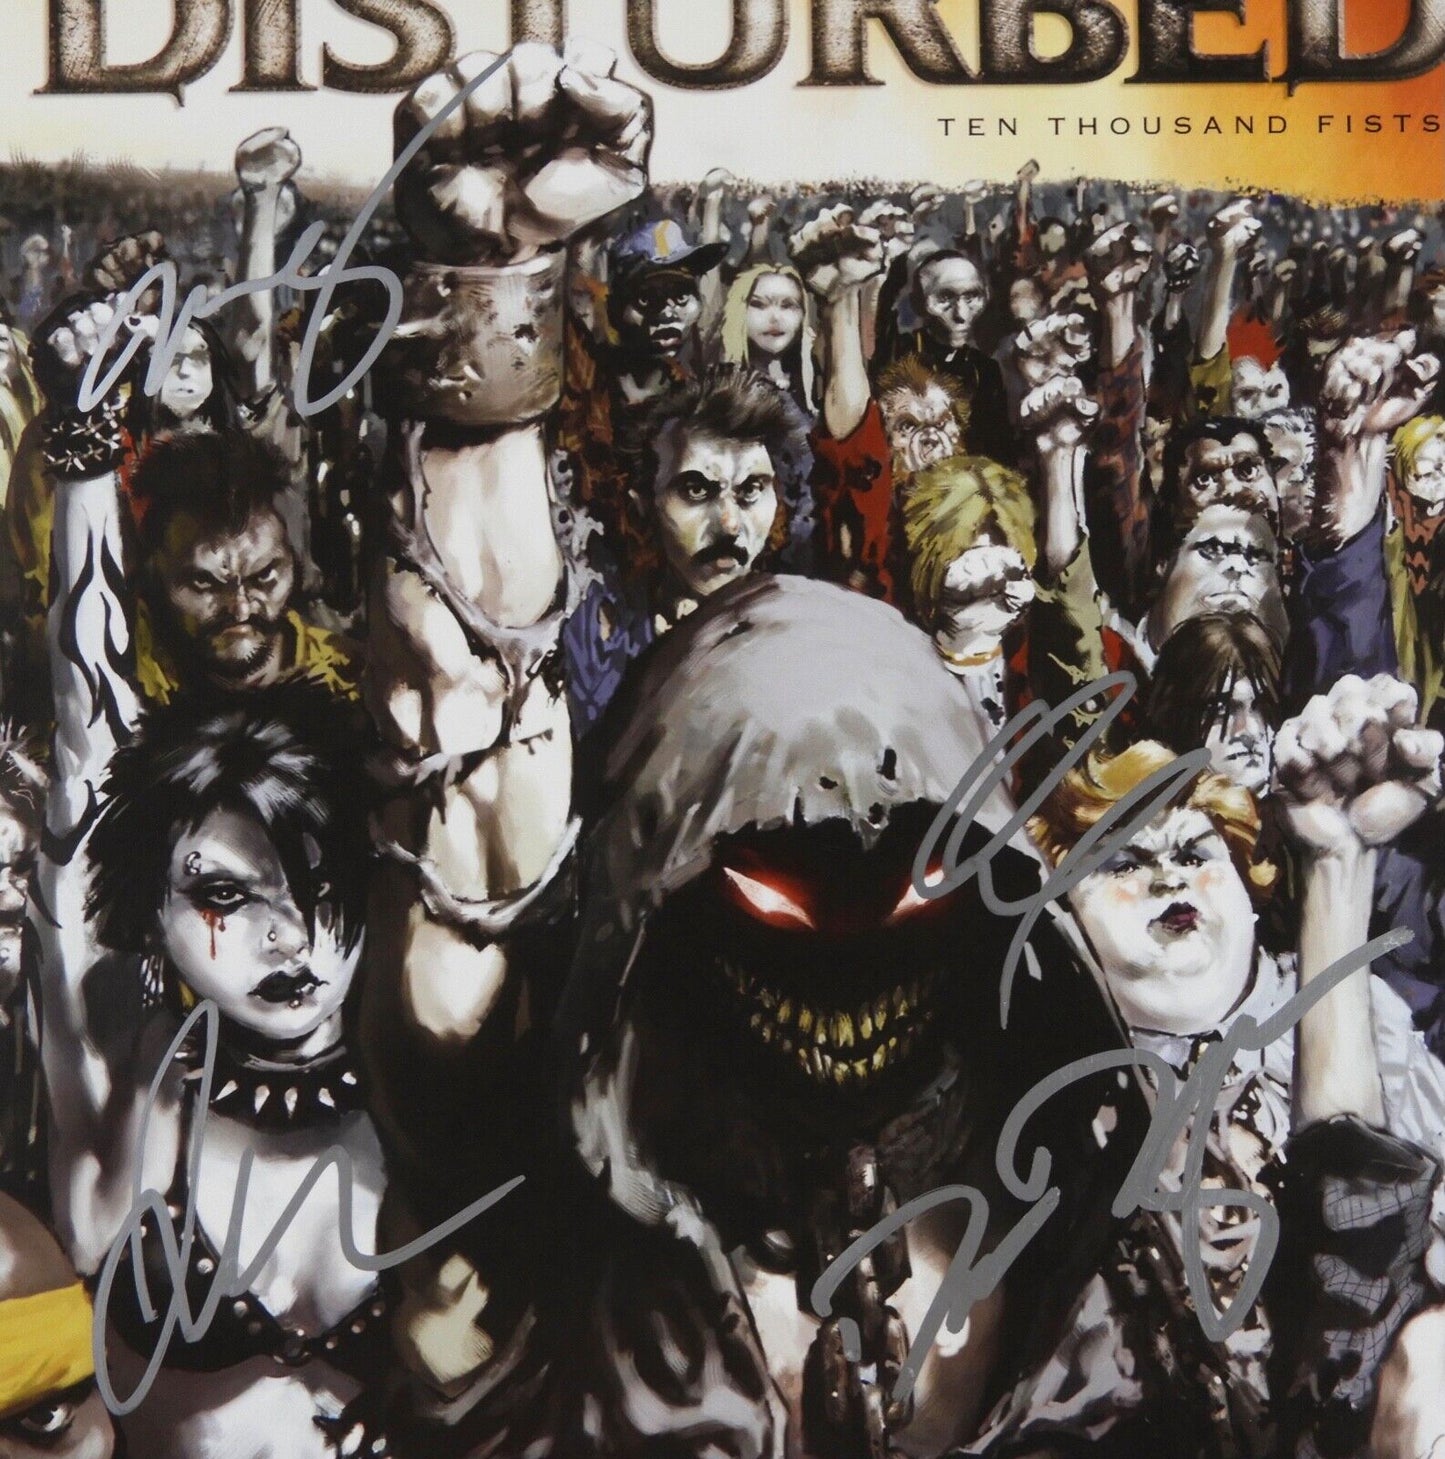 Disturbed Fully JSA Signed Autograph Vinyl Album Record Ten Thousand Fists